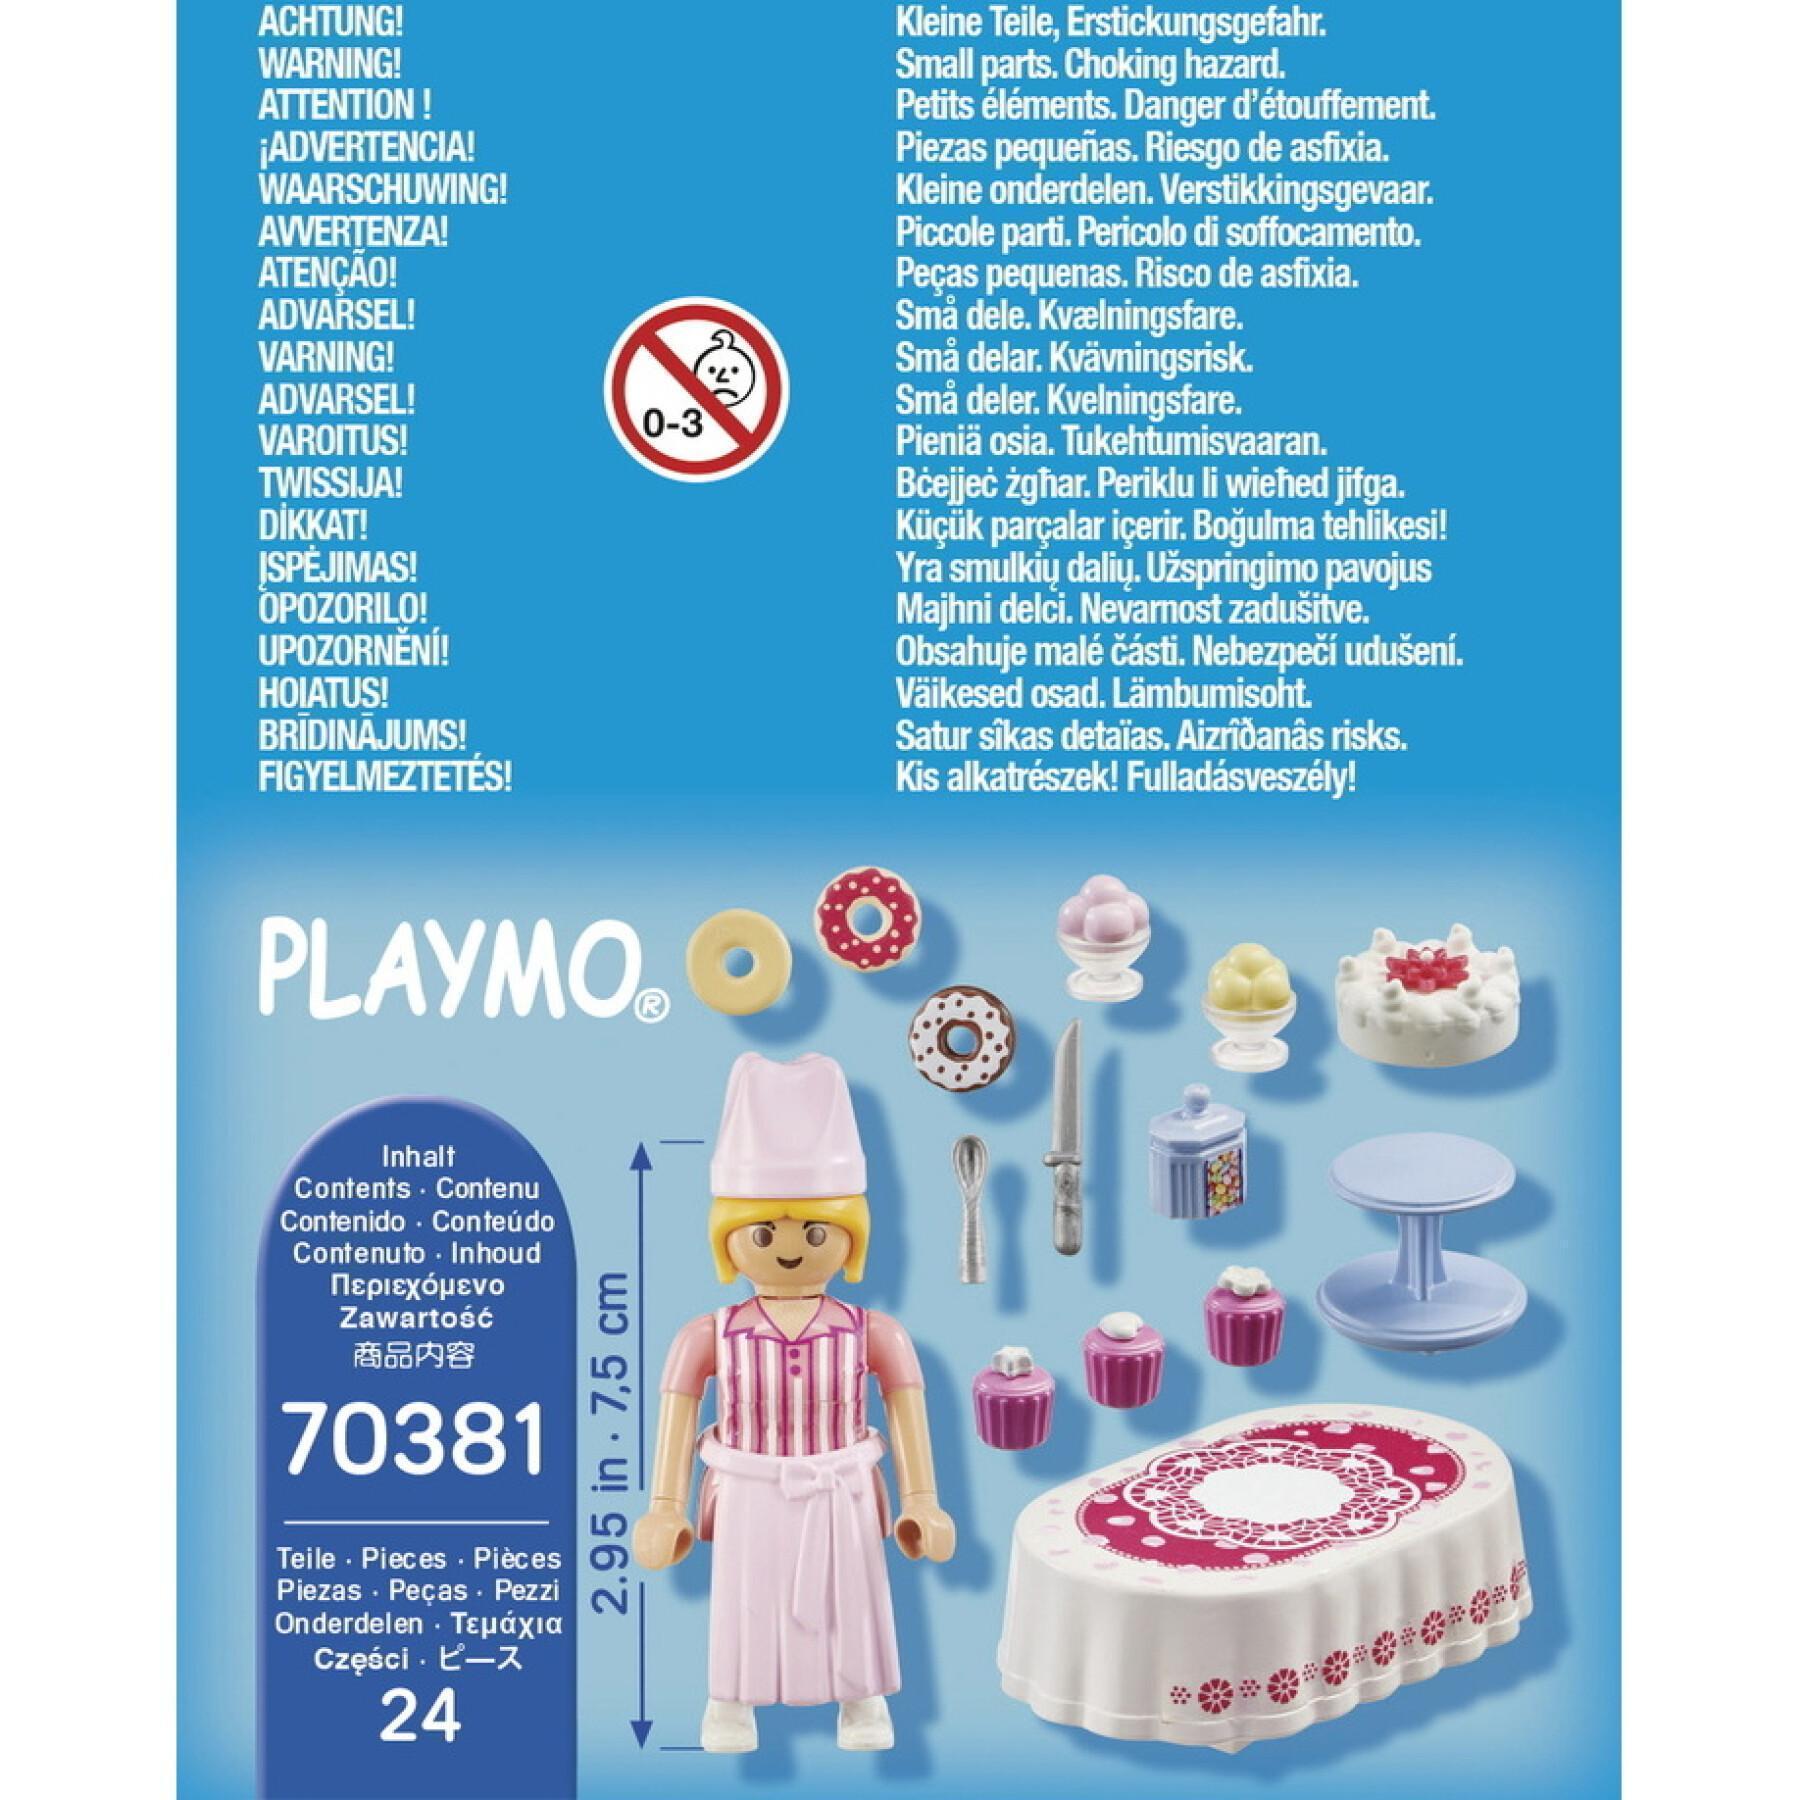 Pastelería Playmobil